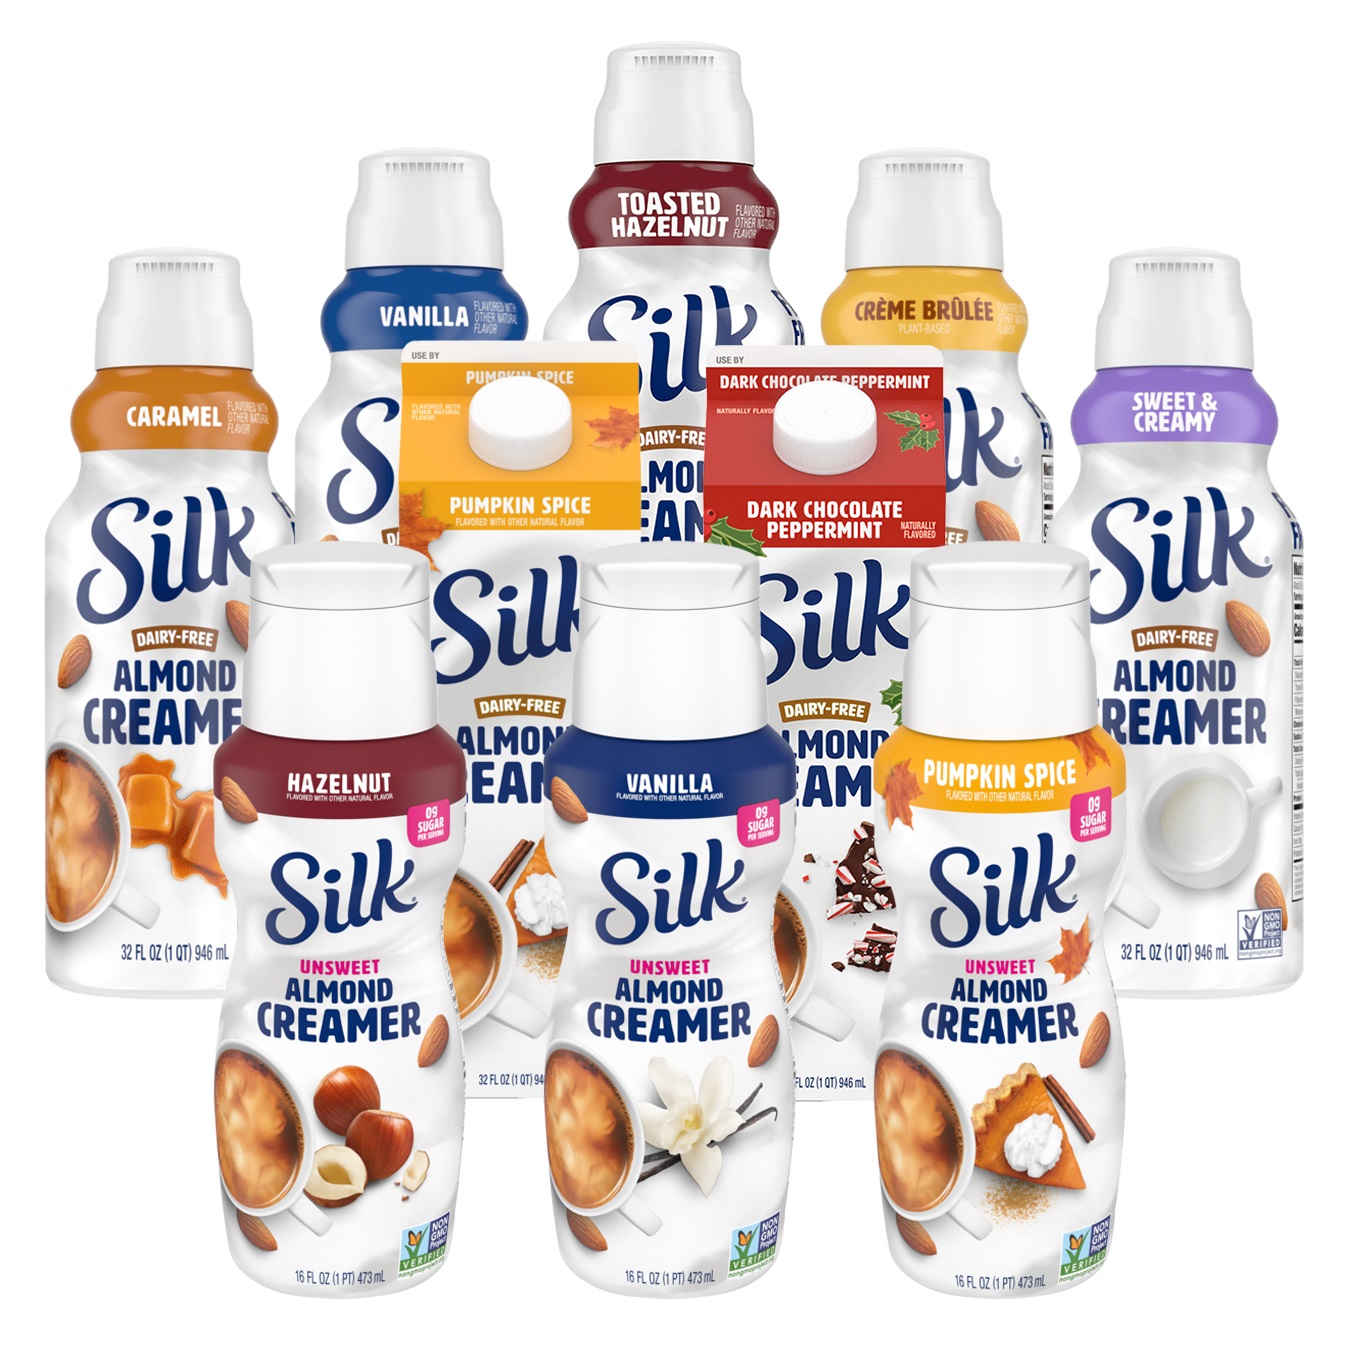 Silk Almond Creamer Reviews & Info 10 Dairy Free Flavors